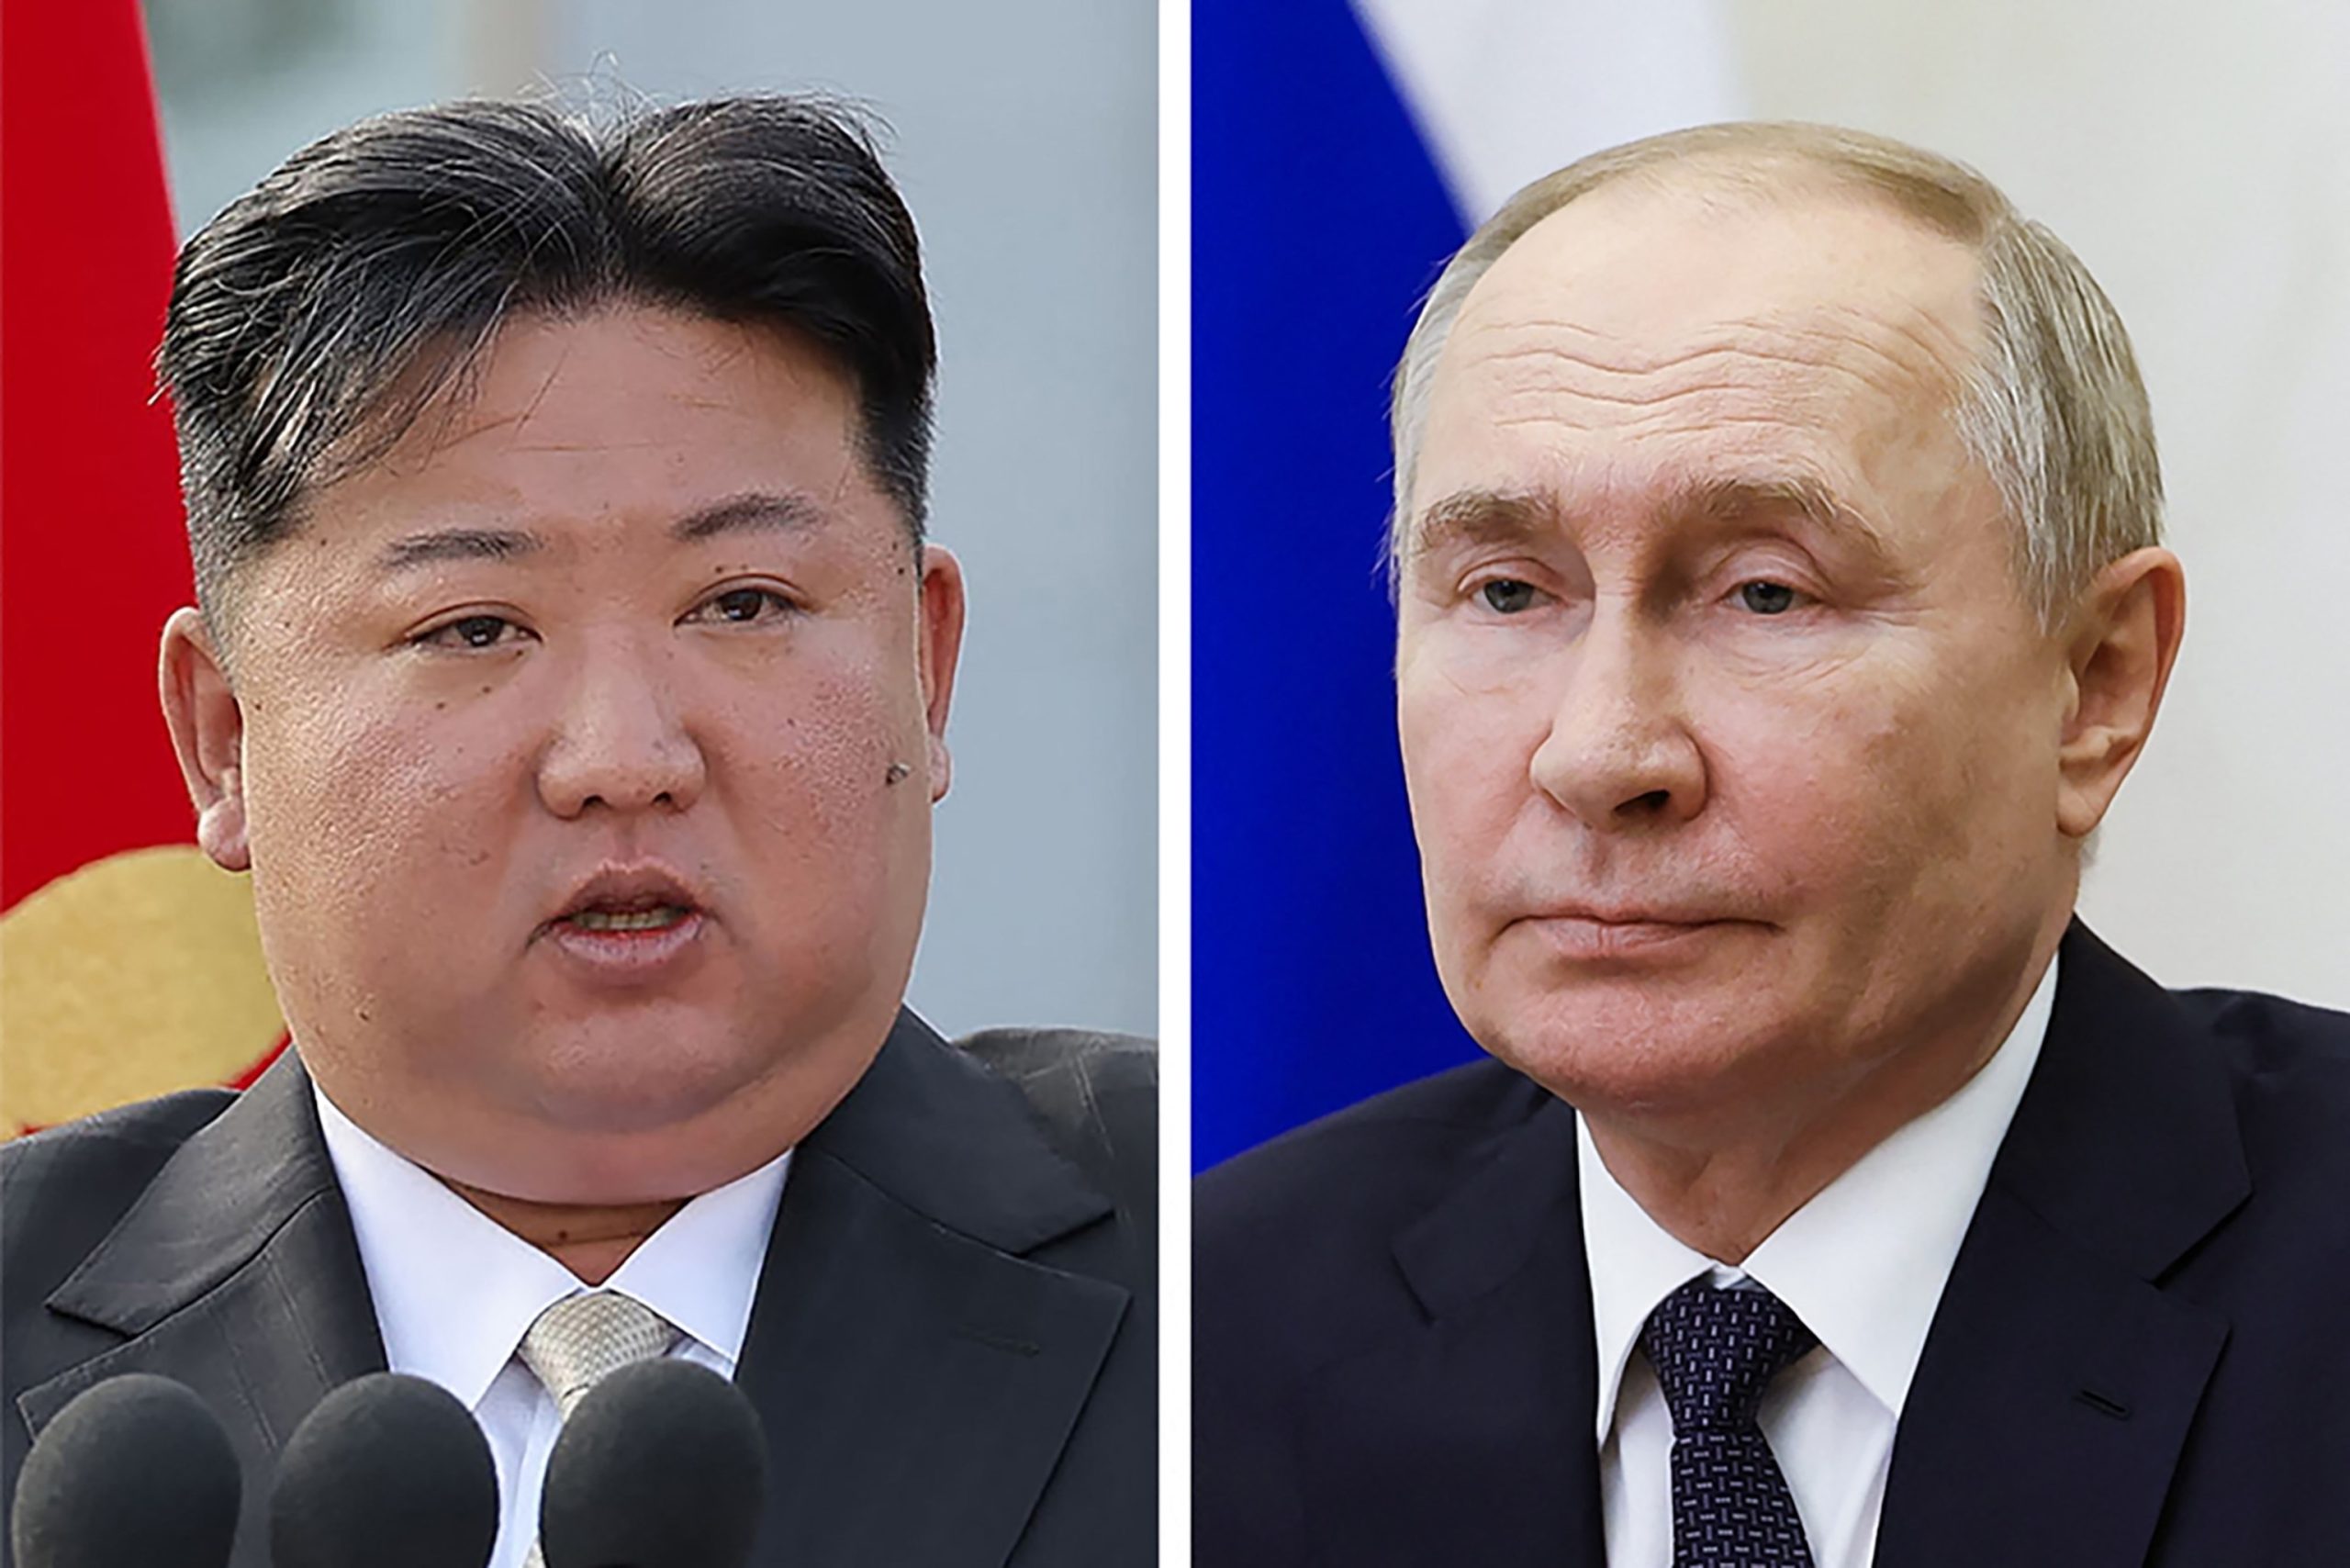 Russian President Vladimir Putin's upcoming state visit to North Korea